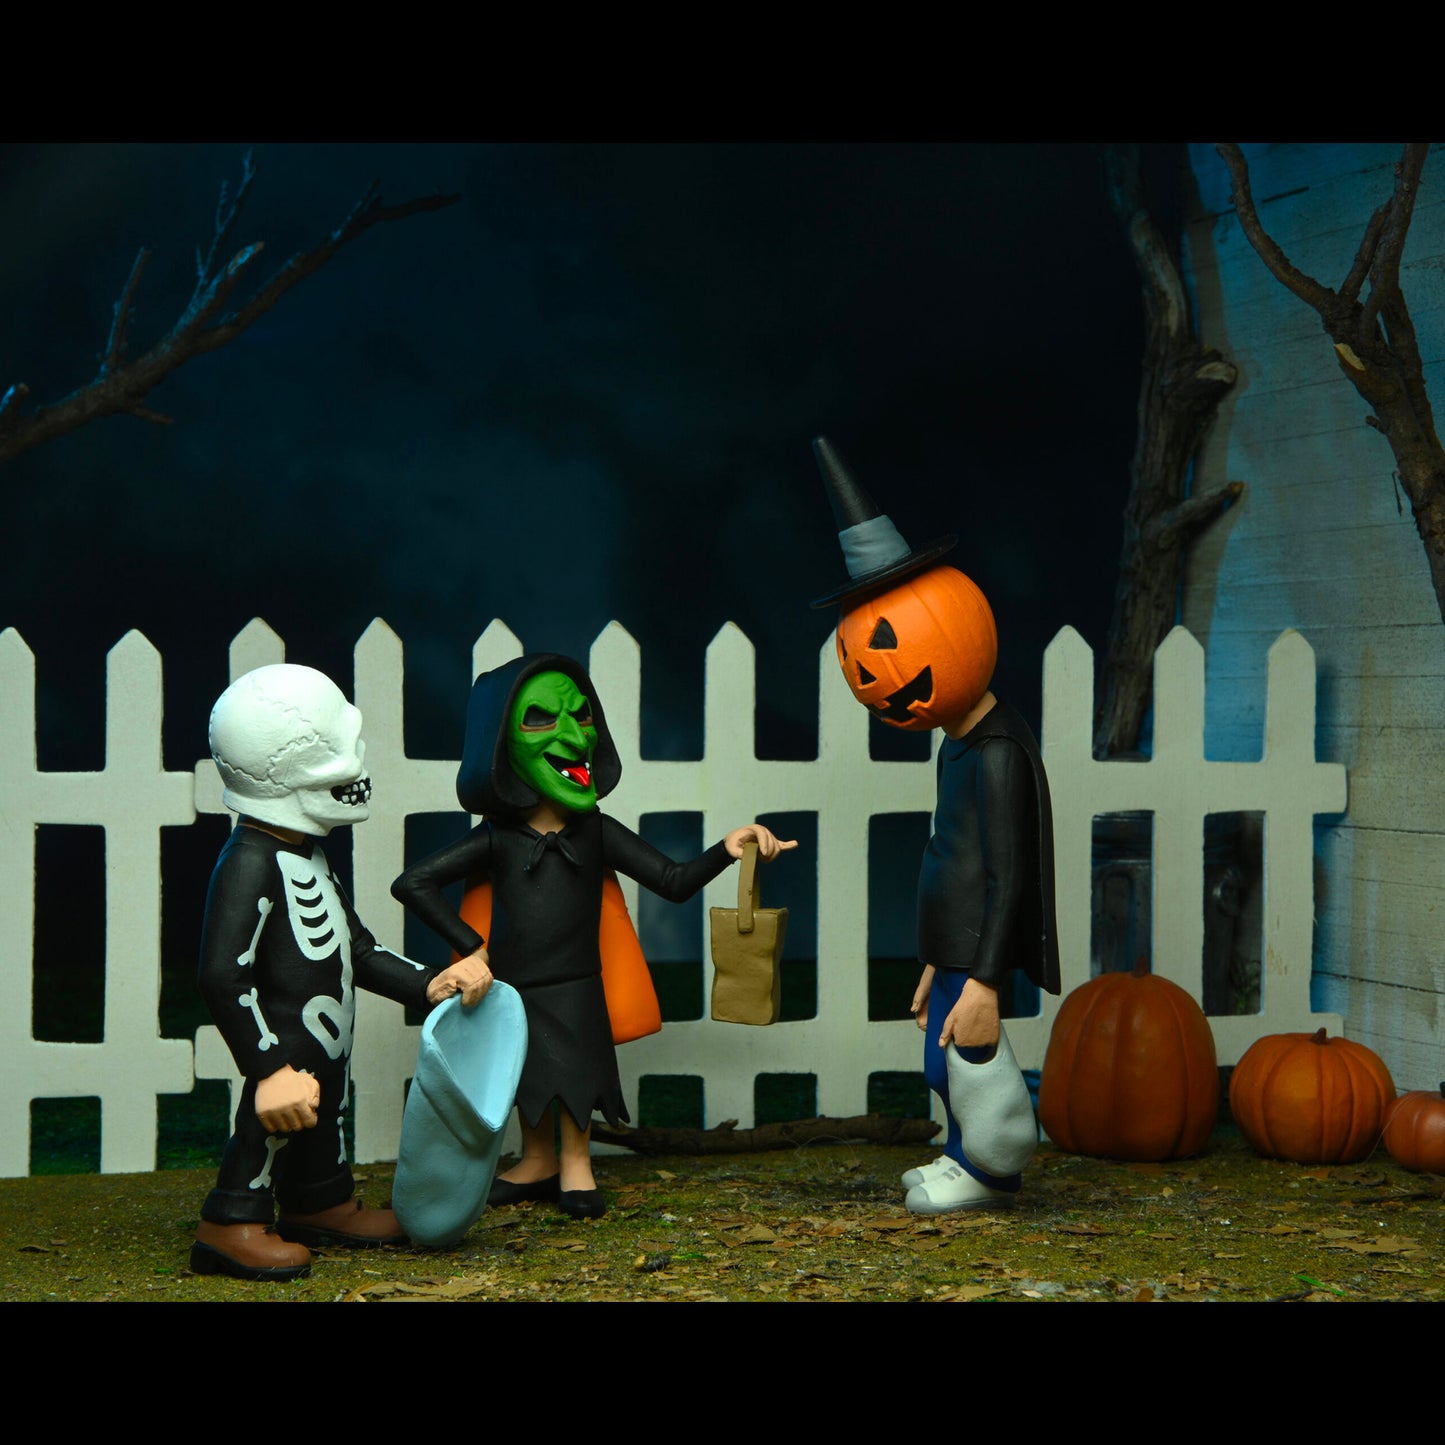 NECA: Halloween - Toony Terrors "Trick or Treaters" 3 Pack 6" Action figures